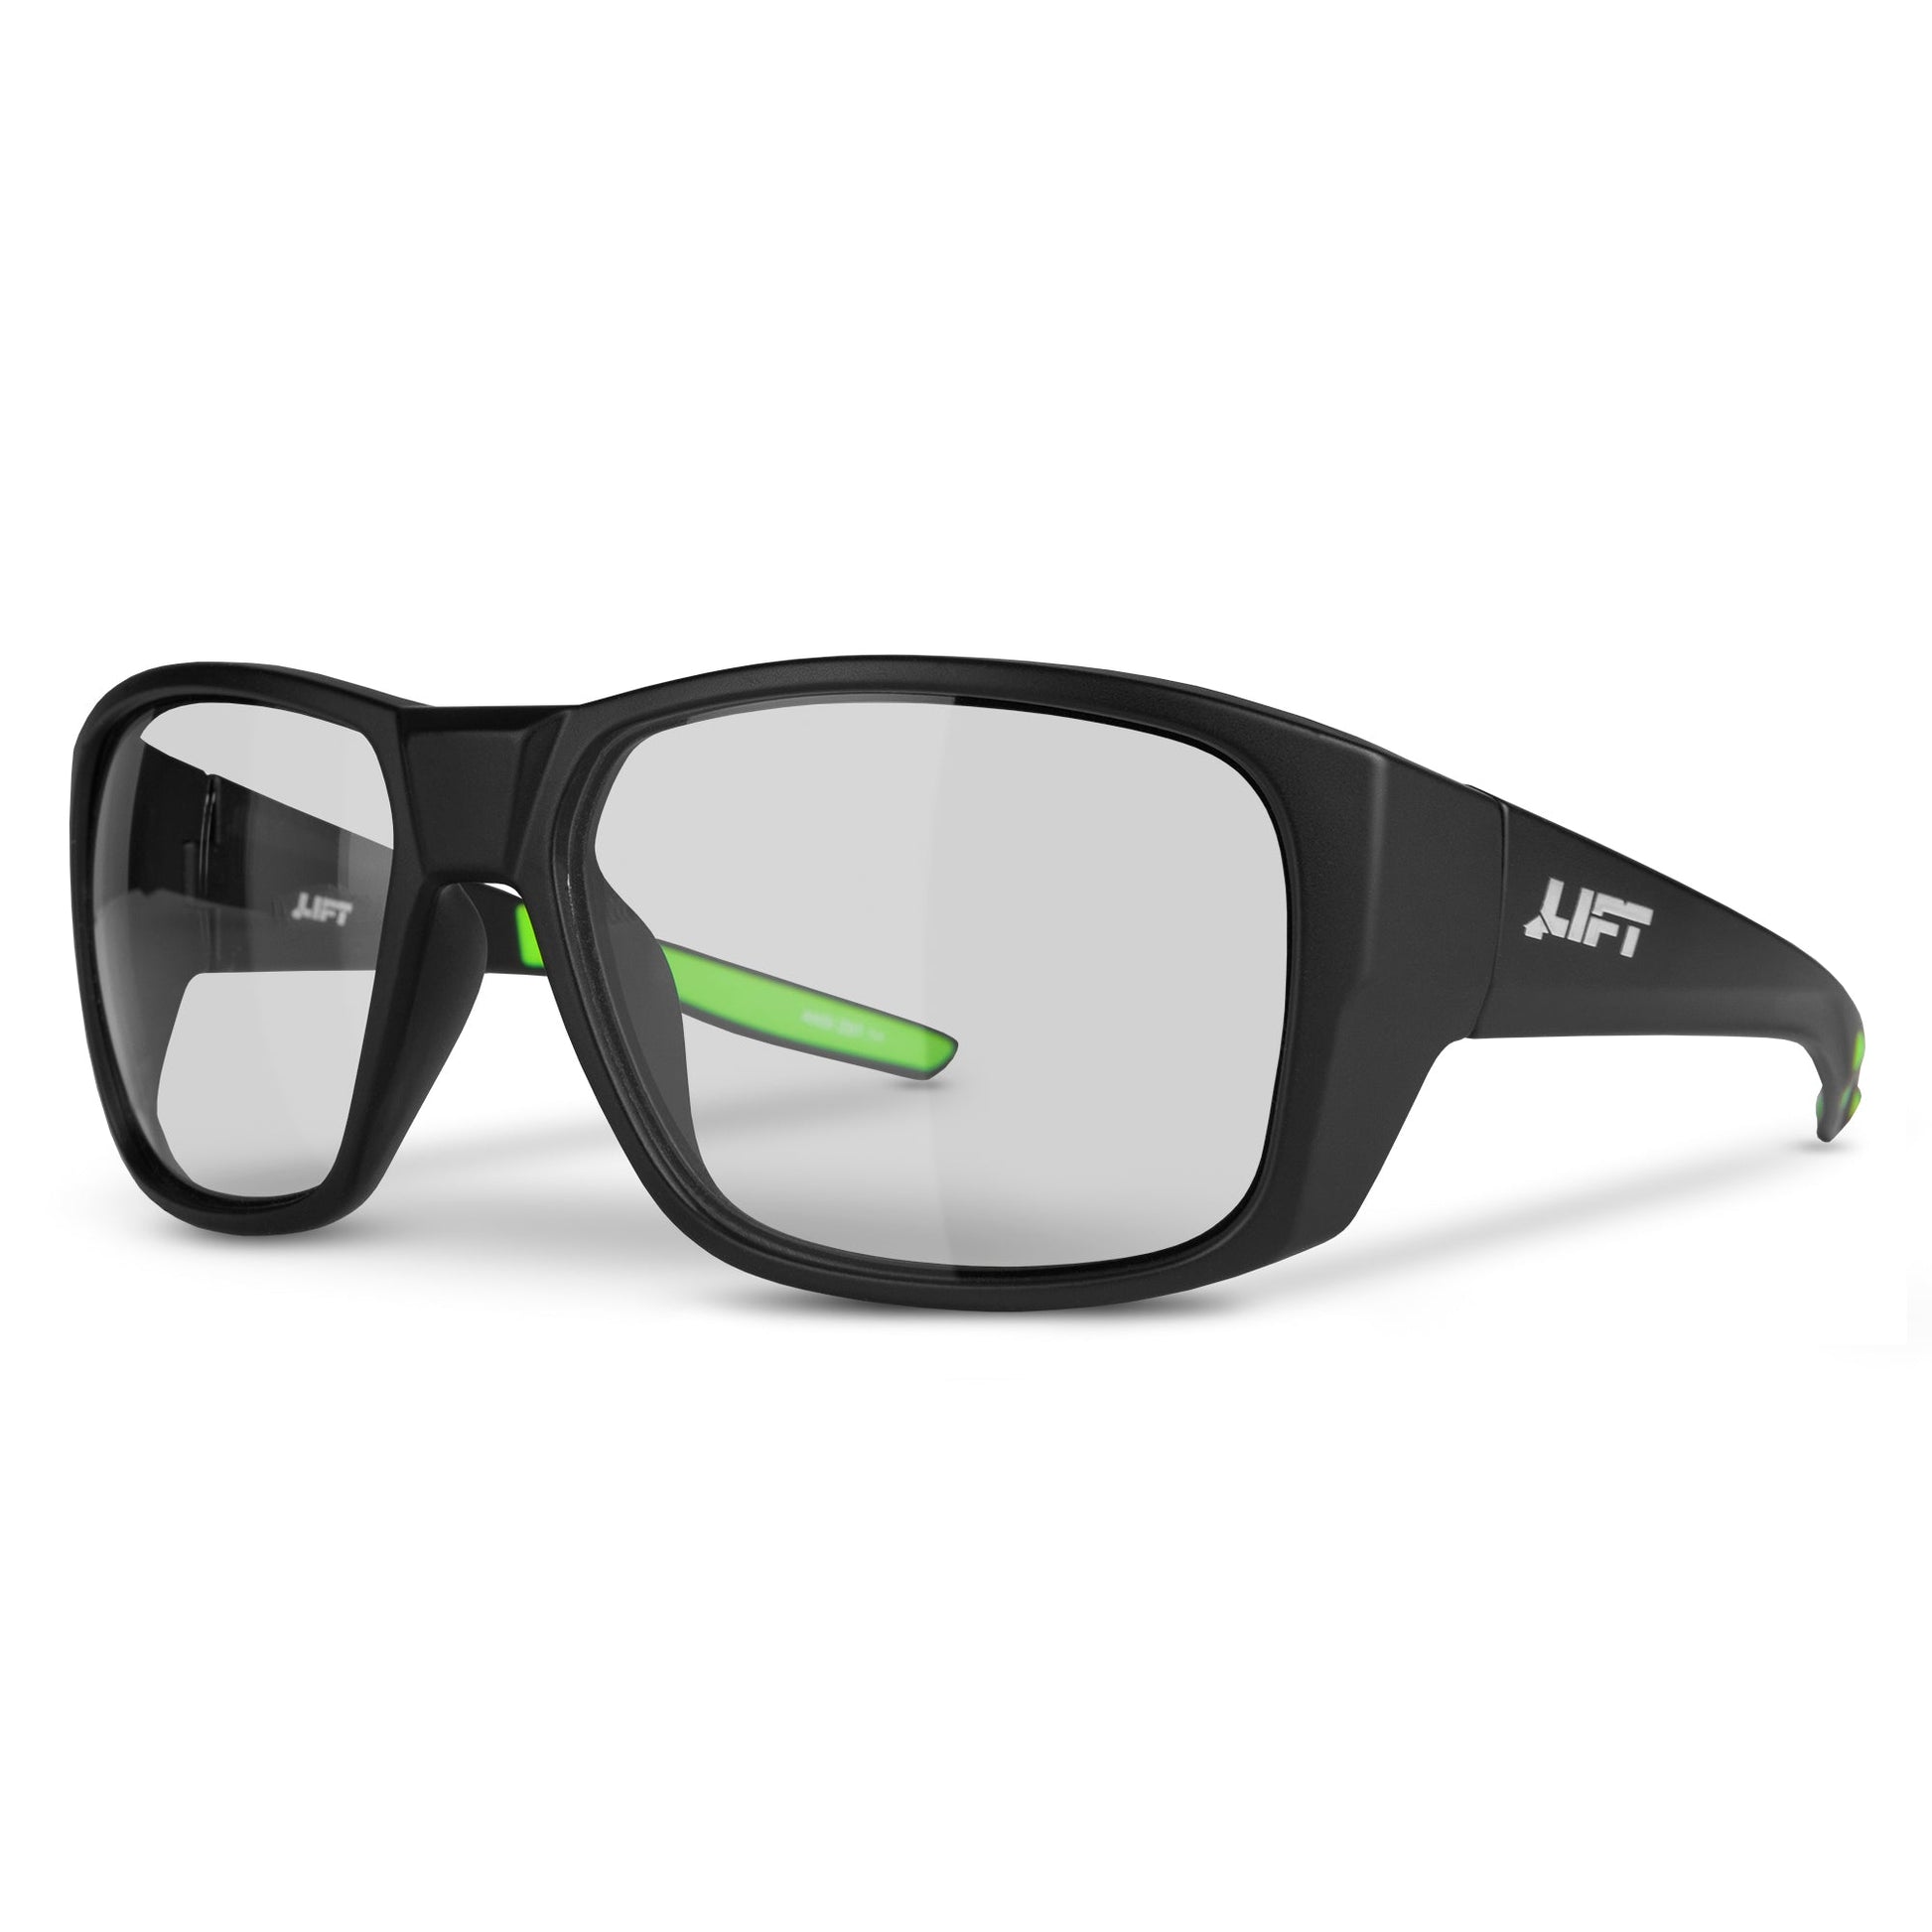 Vanguard Safety Glasses - LIFT Safety